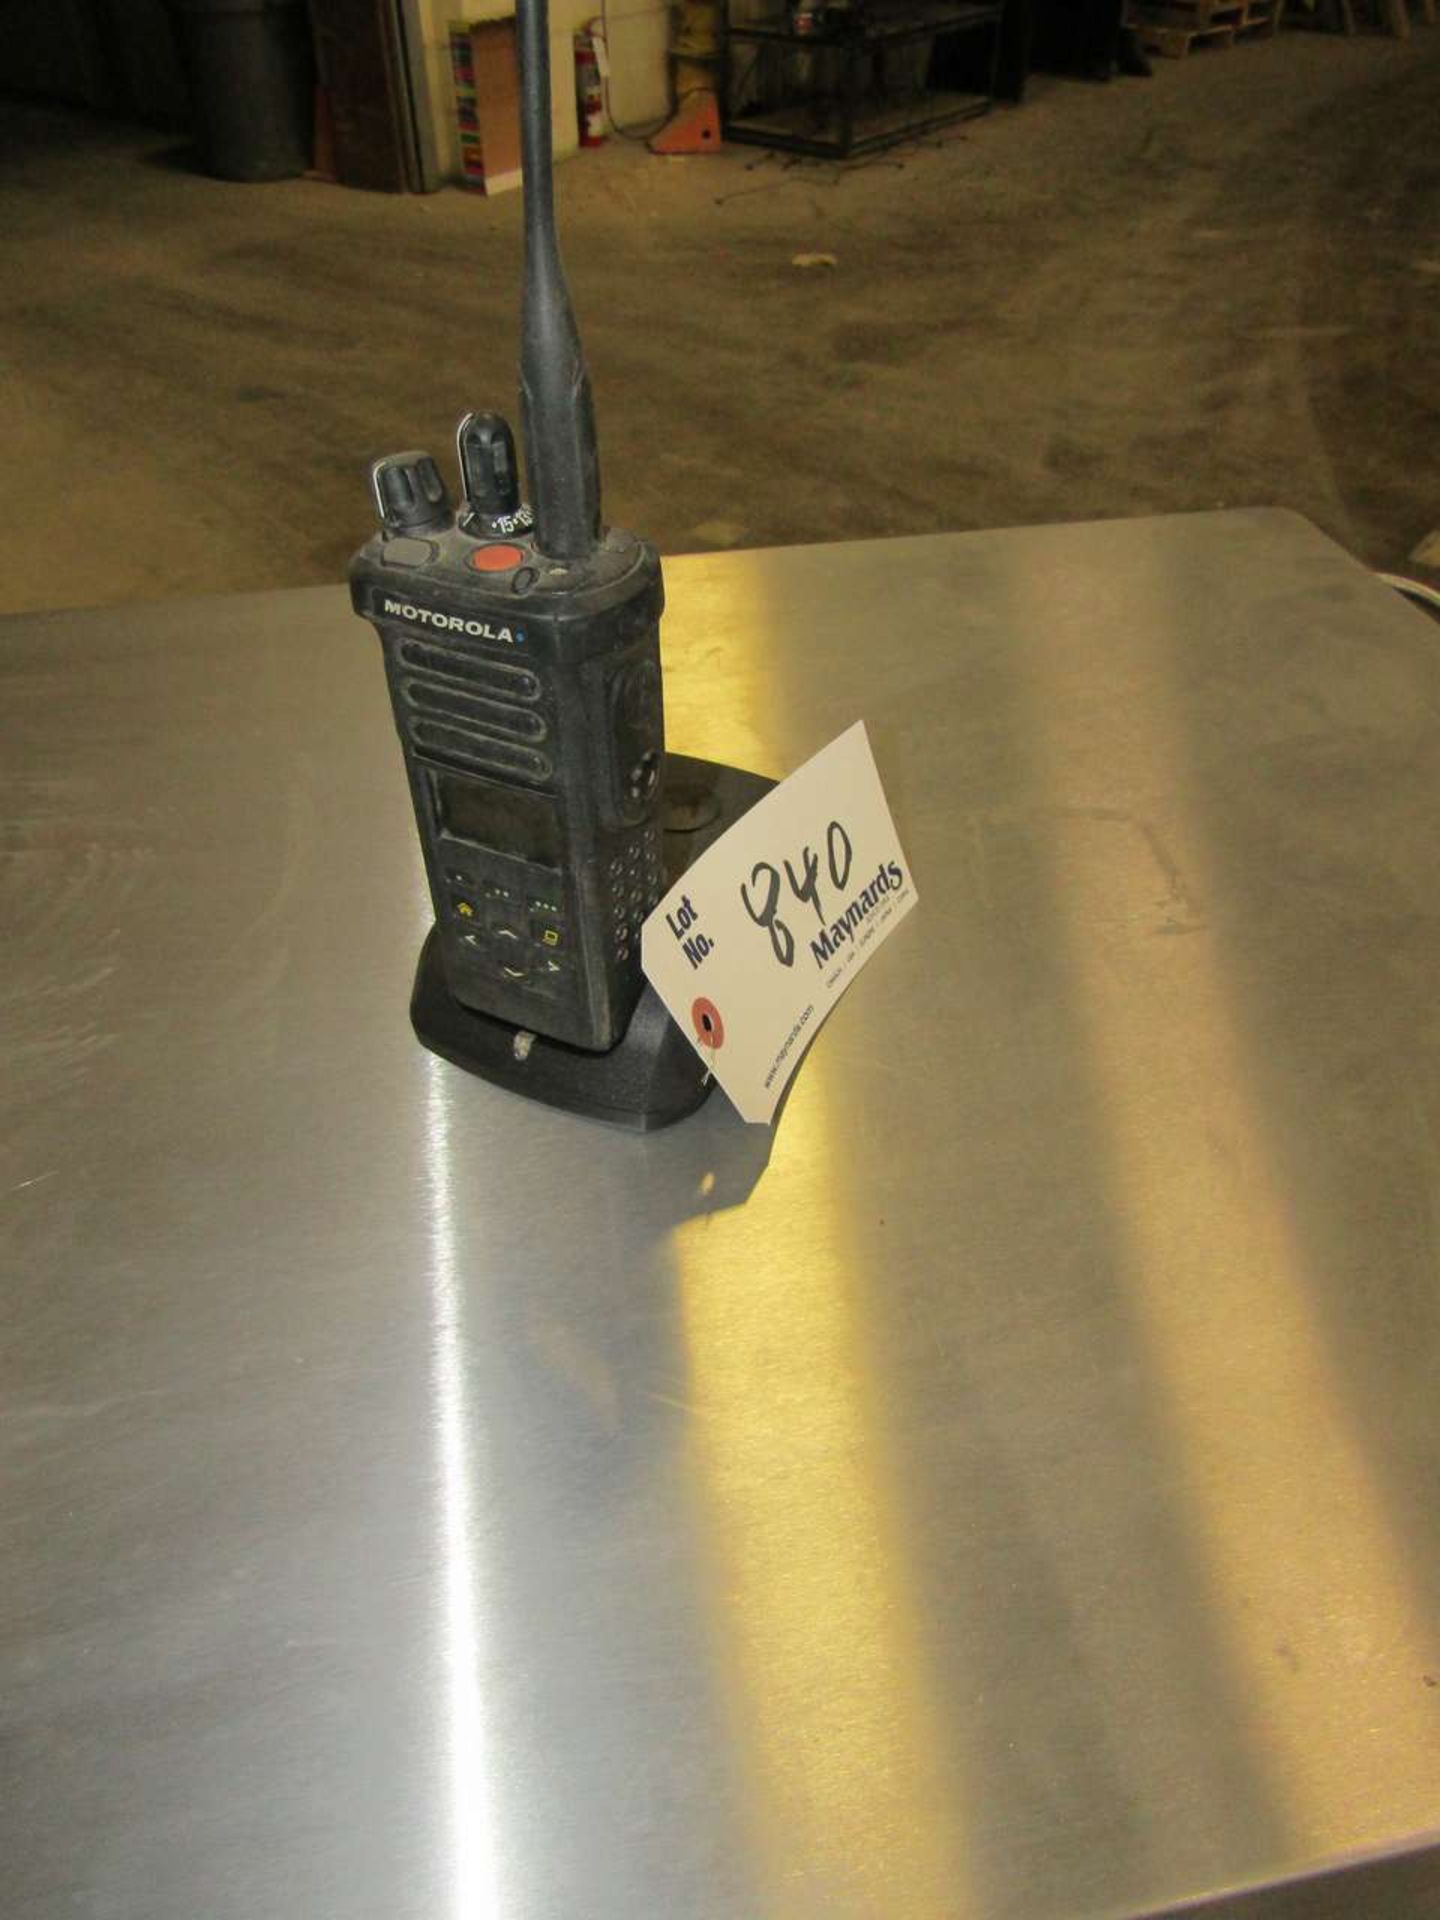 Motorola APEX 4009 2 way Radio with Charger